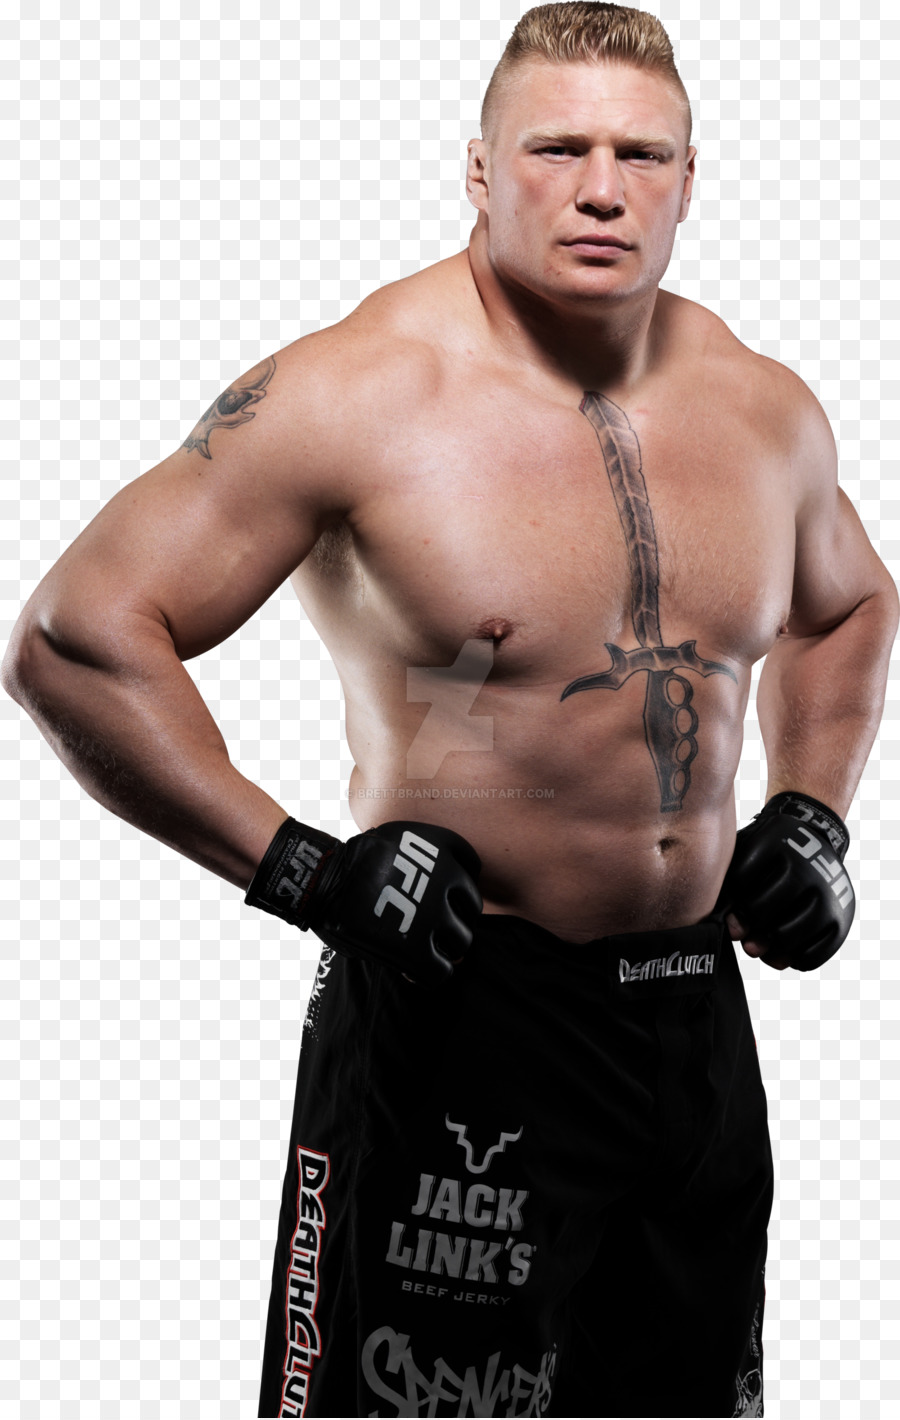 Brock Lesnar UFC 116 Mixed martial arts World Heavyweight Championship Best Fighter ESPY Award - Brock Lesnar PNG Transparent Image png download - 1600*2520 - Free Transparent  png Download.